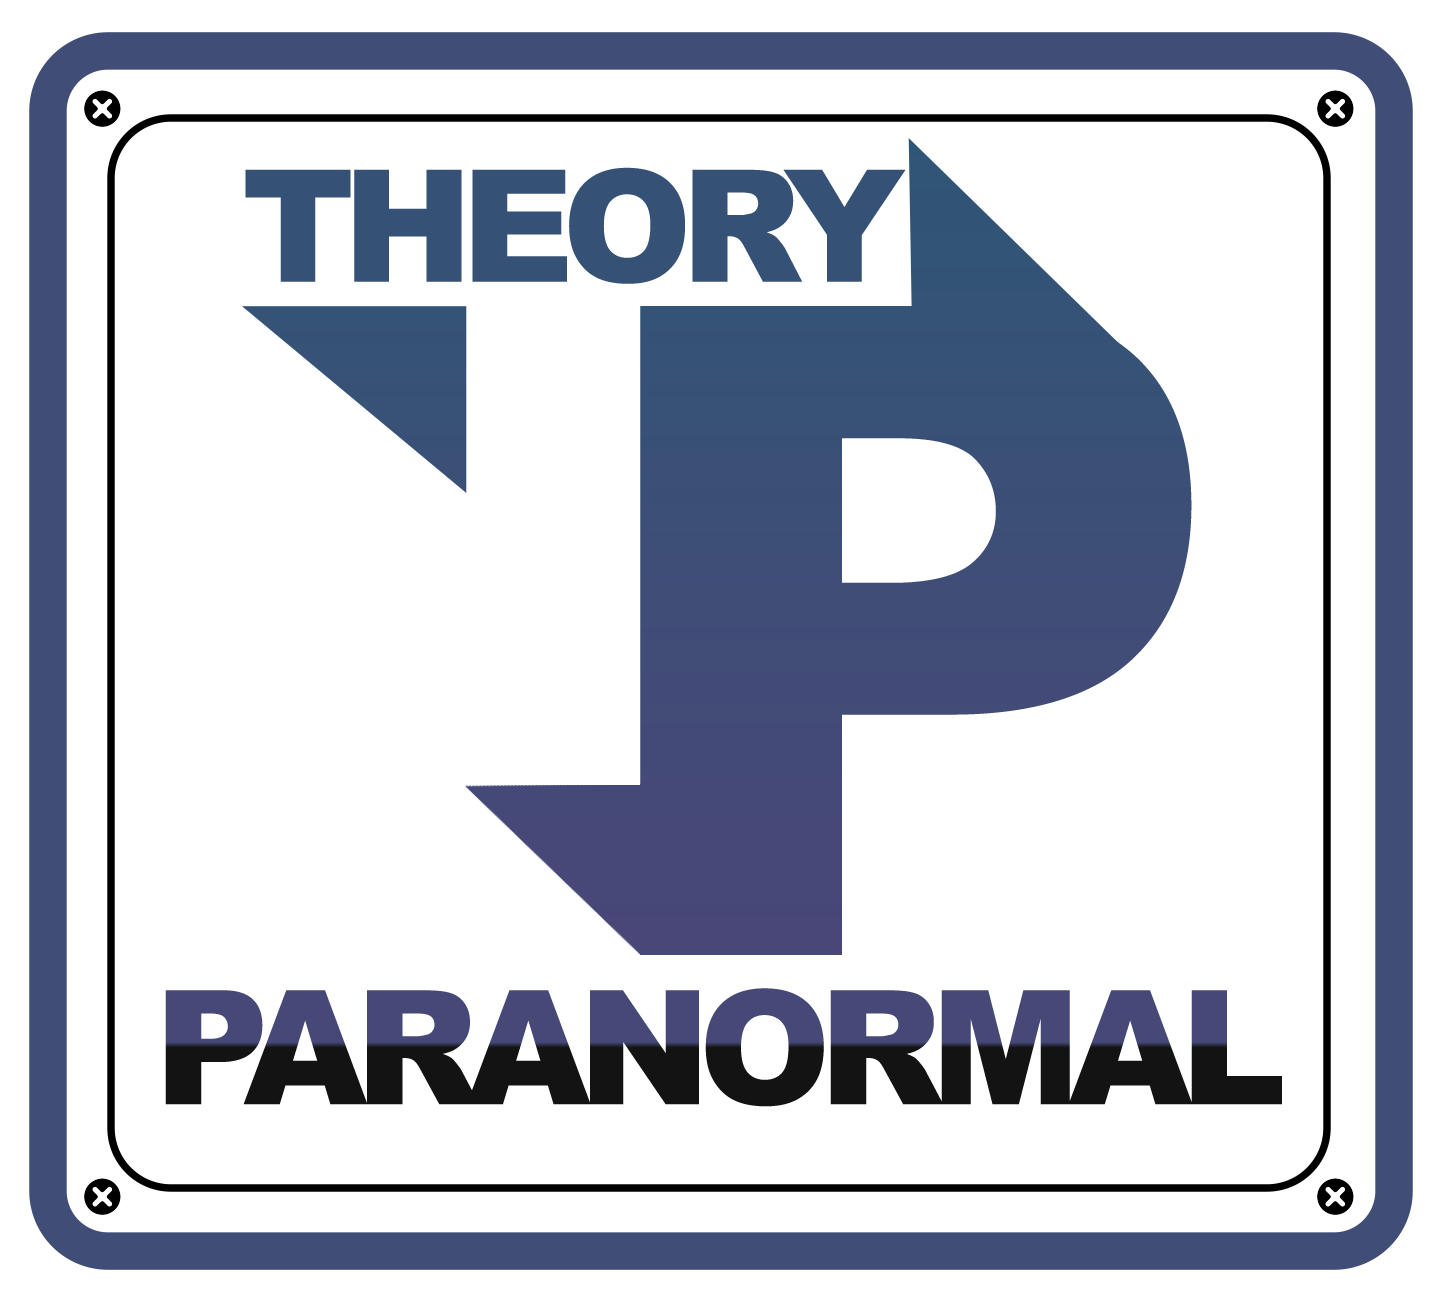 Theory Paranormal